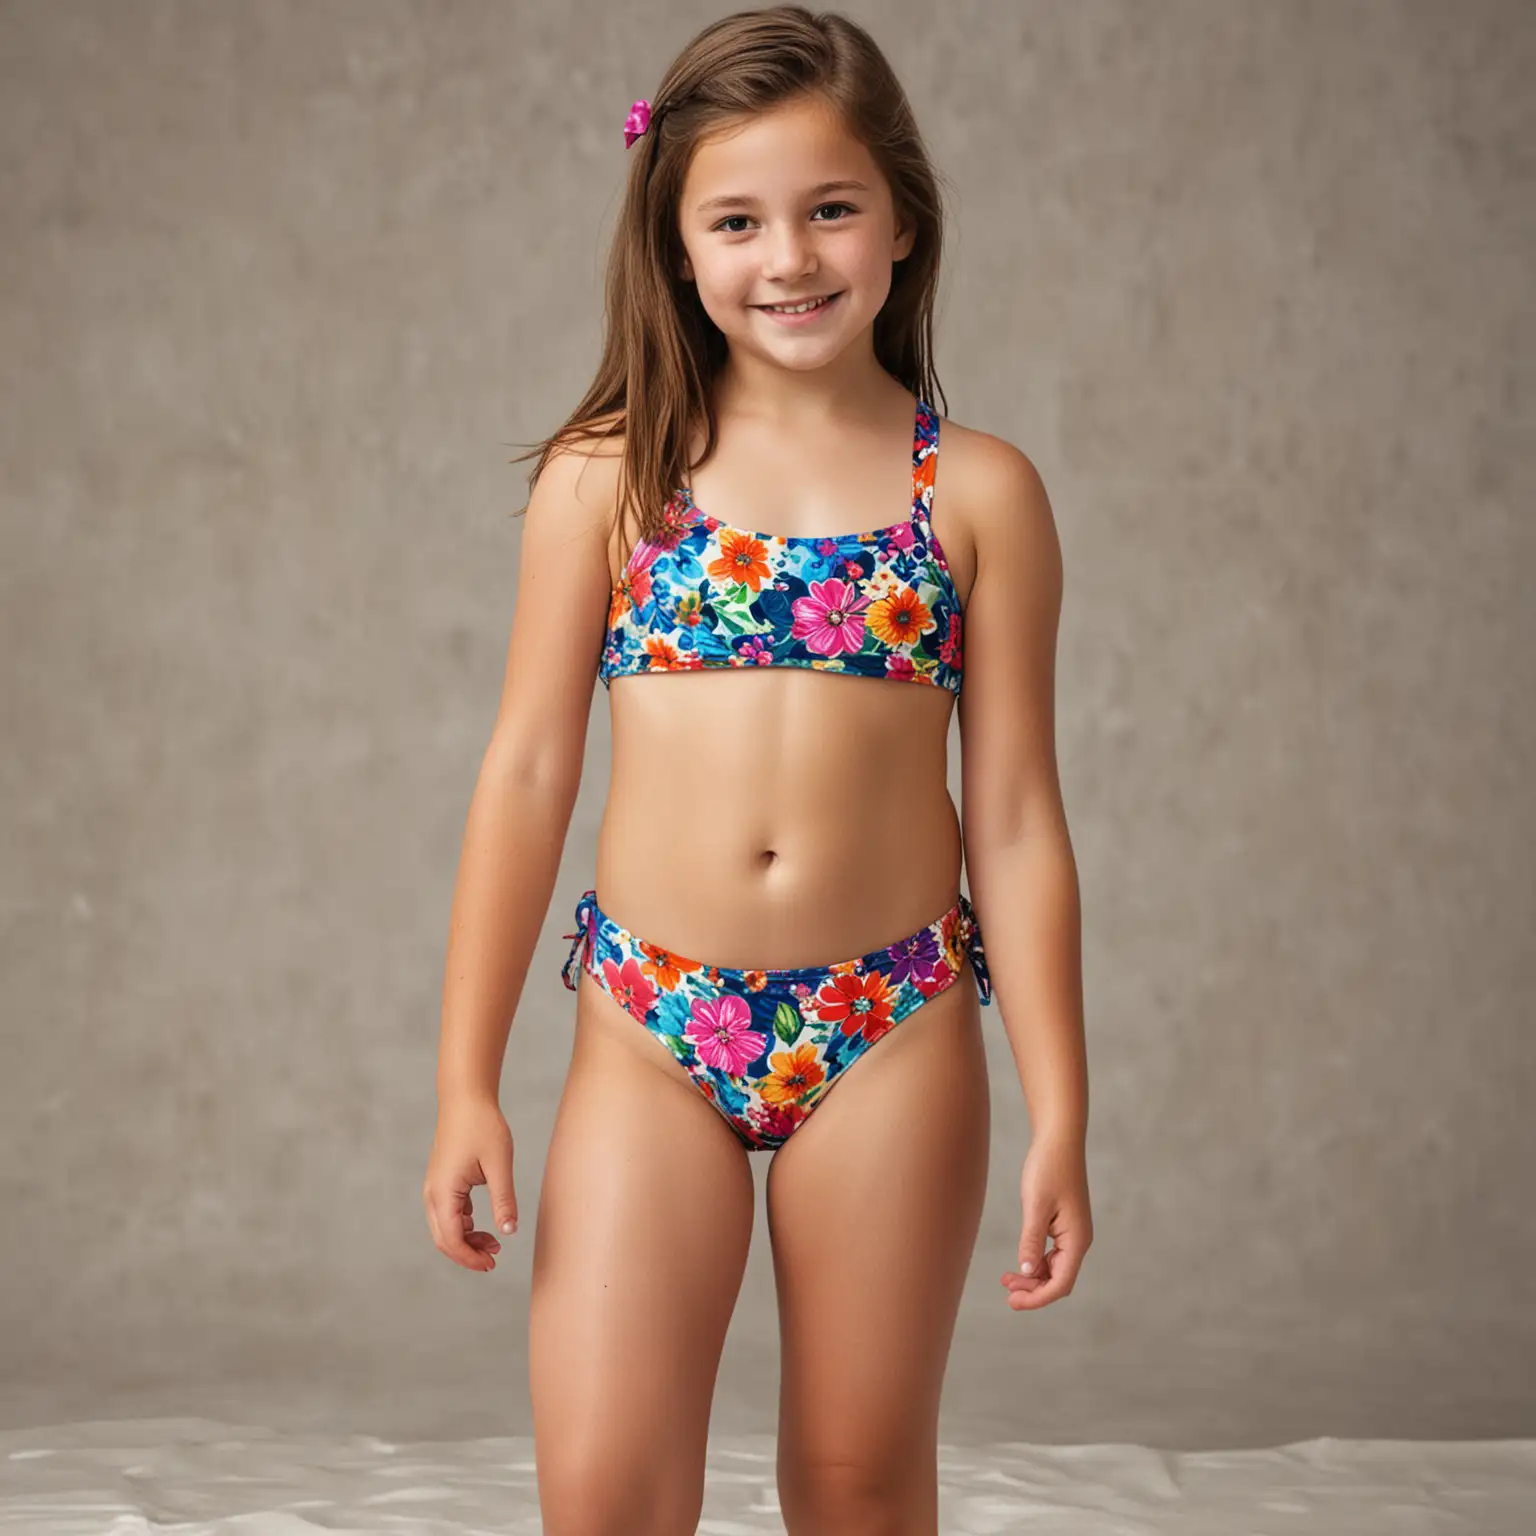 Smiling-12YearOld-Girl-in-Flower-Swimsuit-Standing-Near-Water